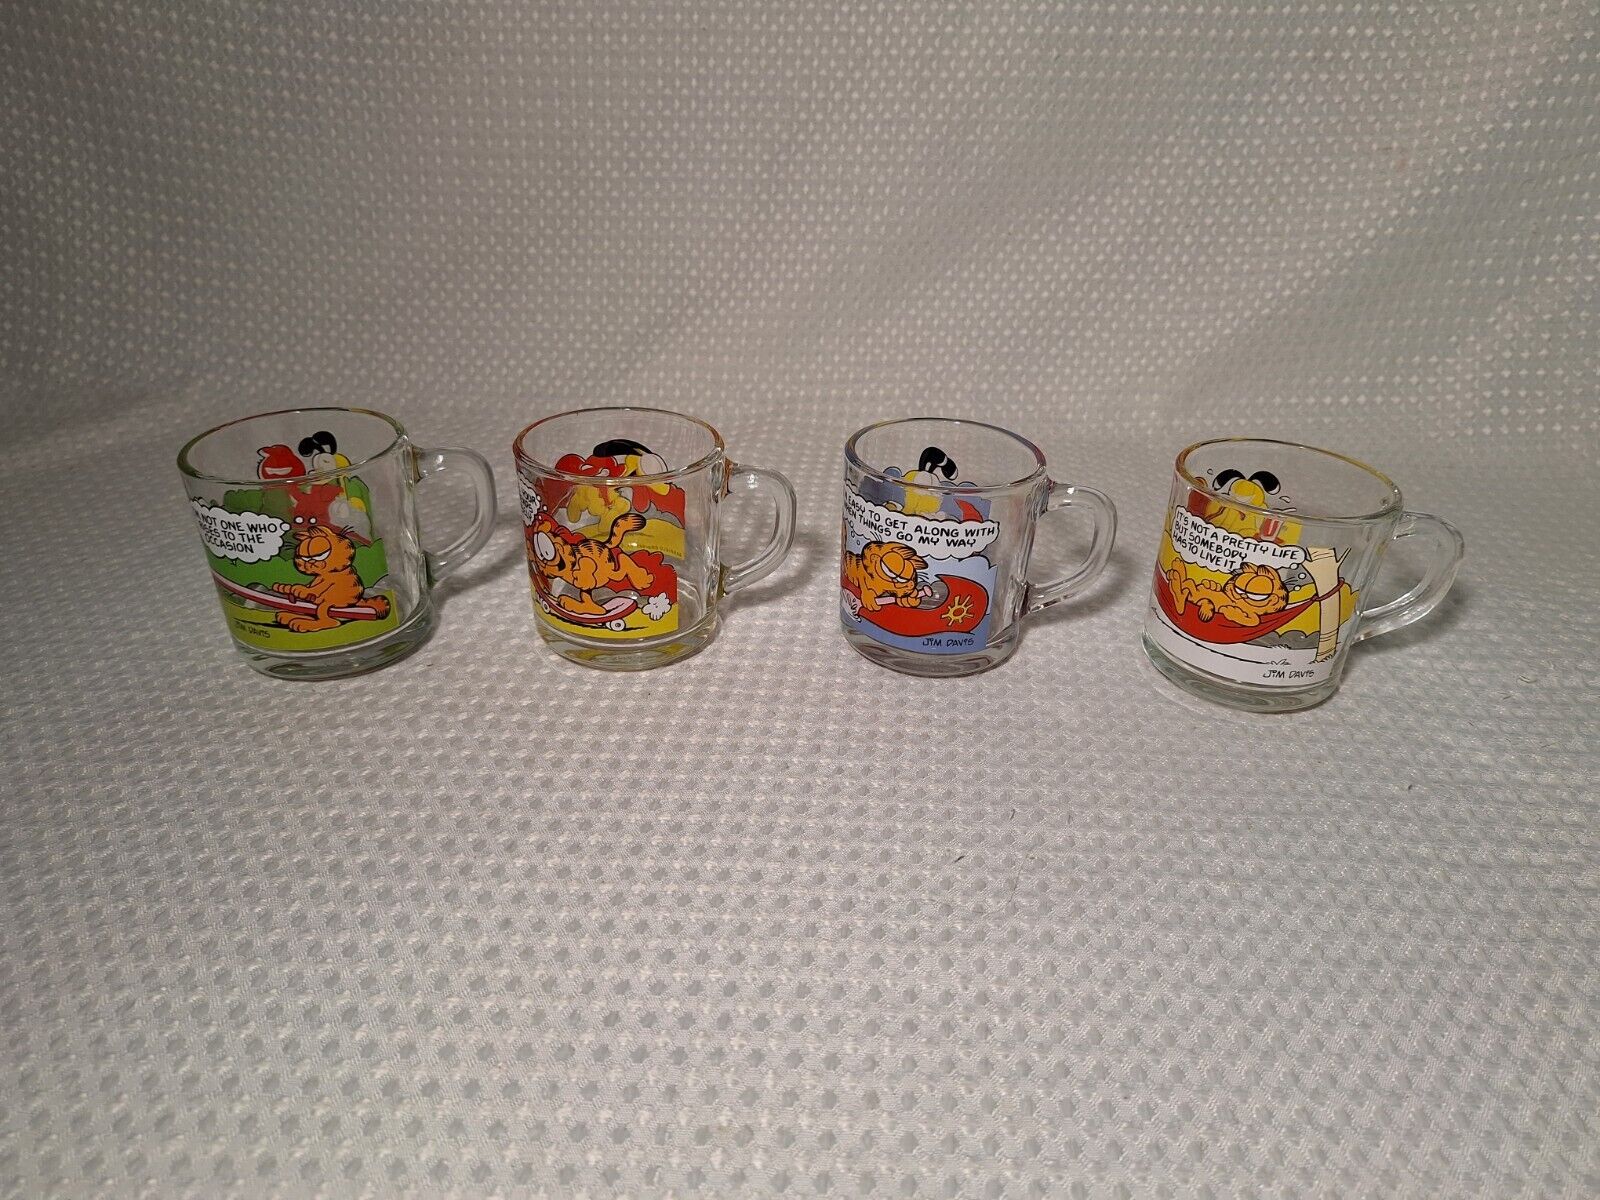 Vintage 1978 McDonald's Garfield Characters Glass Cups Mugs Jim Davis Set of 4